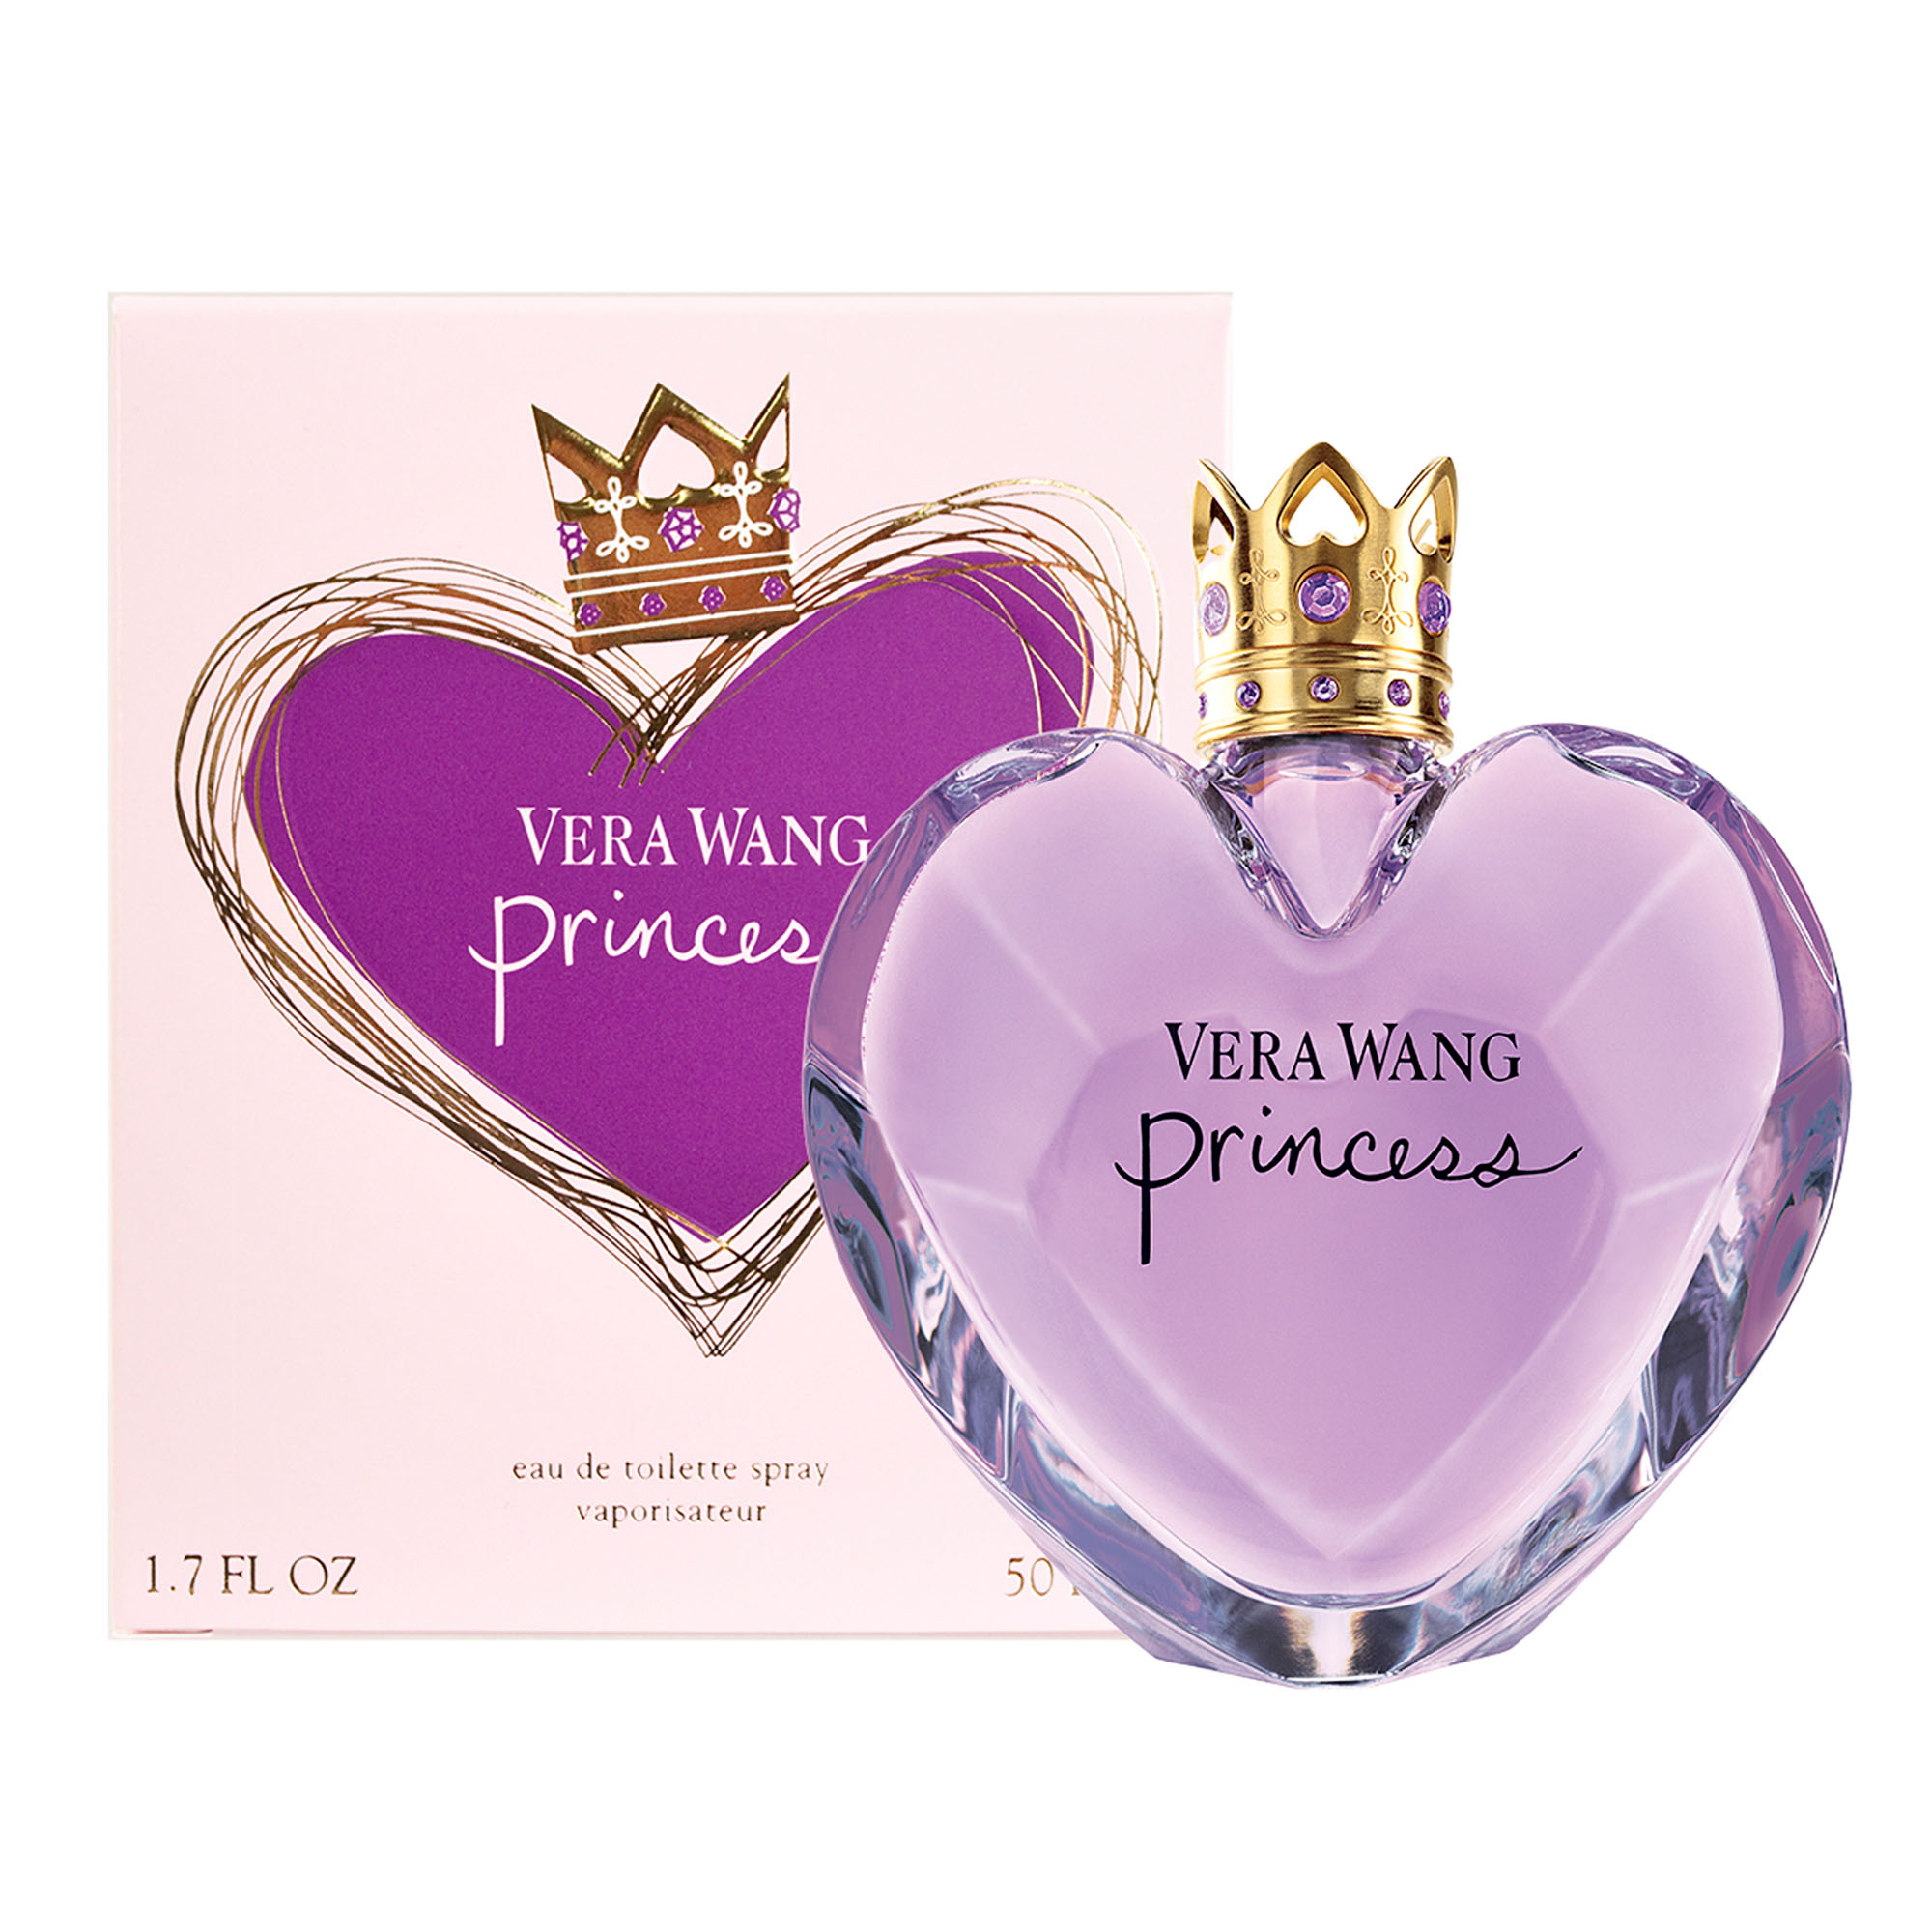 Vera Wang Princess Eau de Toilette, Perfume for Women, 1.7 Oz - image 2 of 2